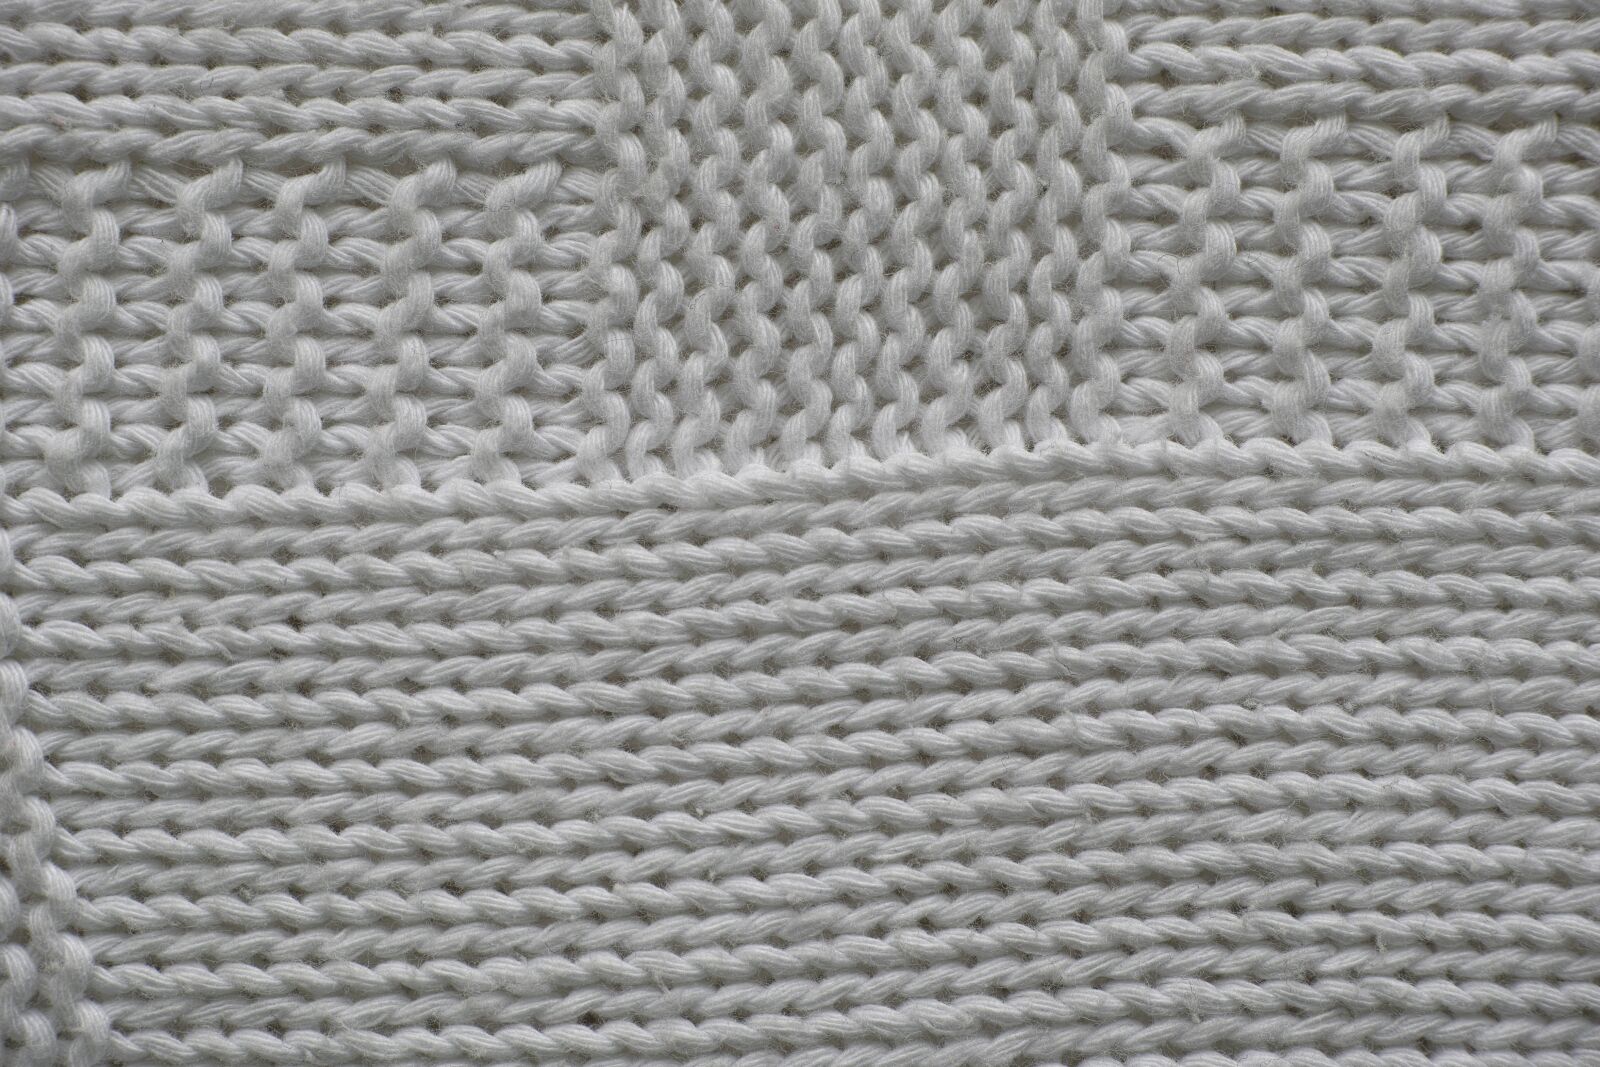 Sigma DP3 Merrill sample photo. Textile, fabric, wool photography